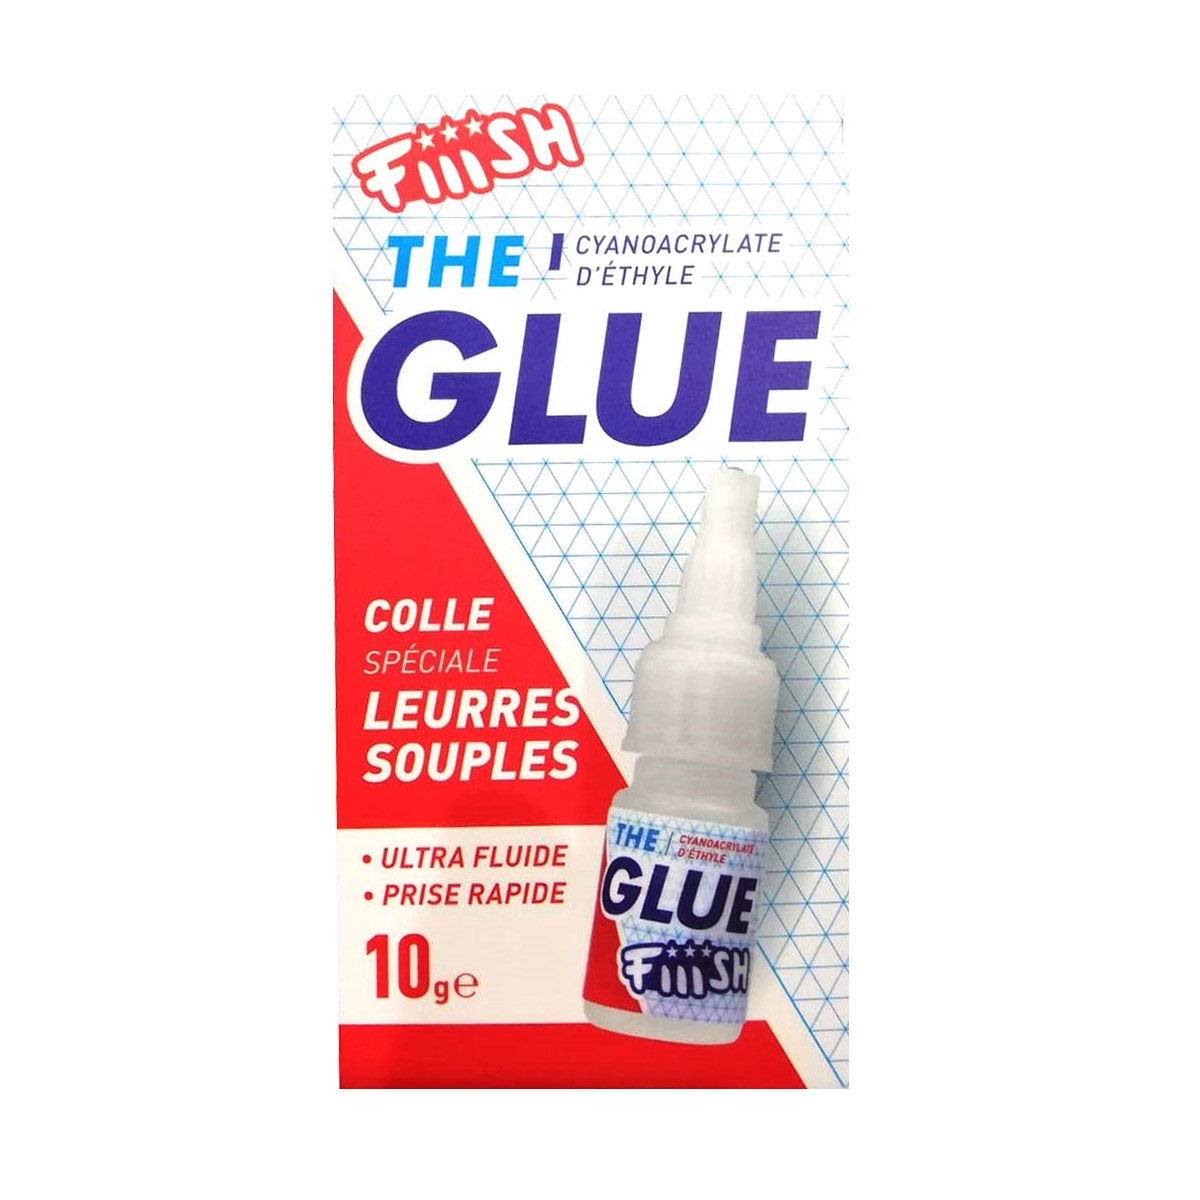 Fiiish the glue 10g